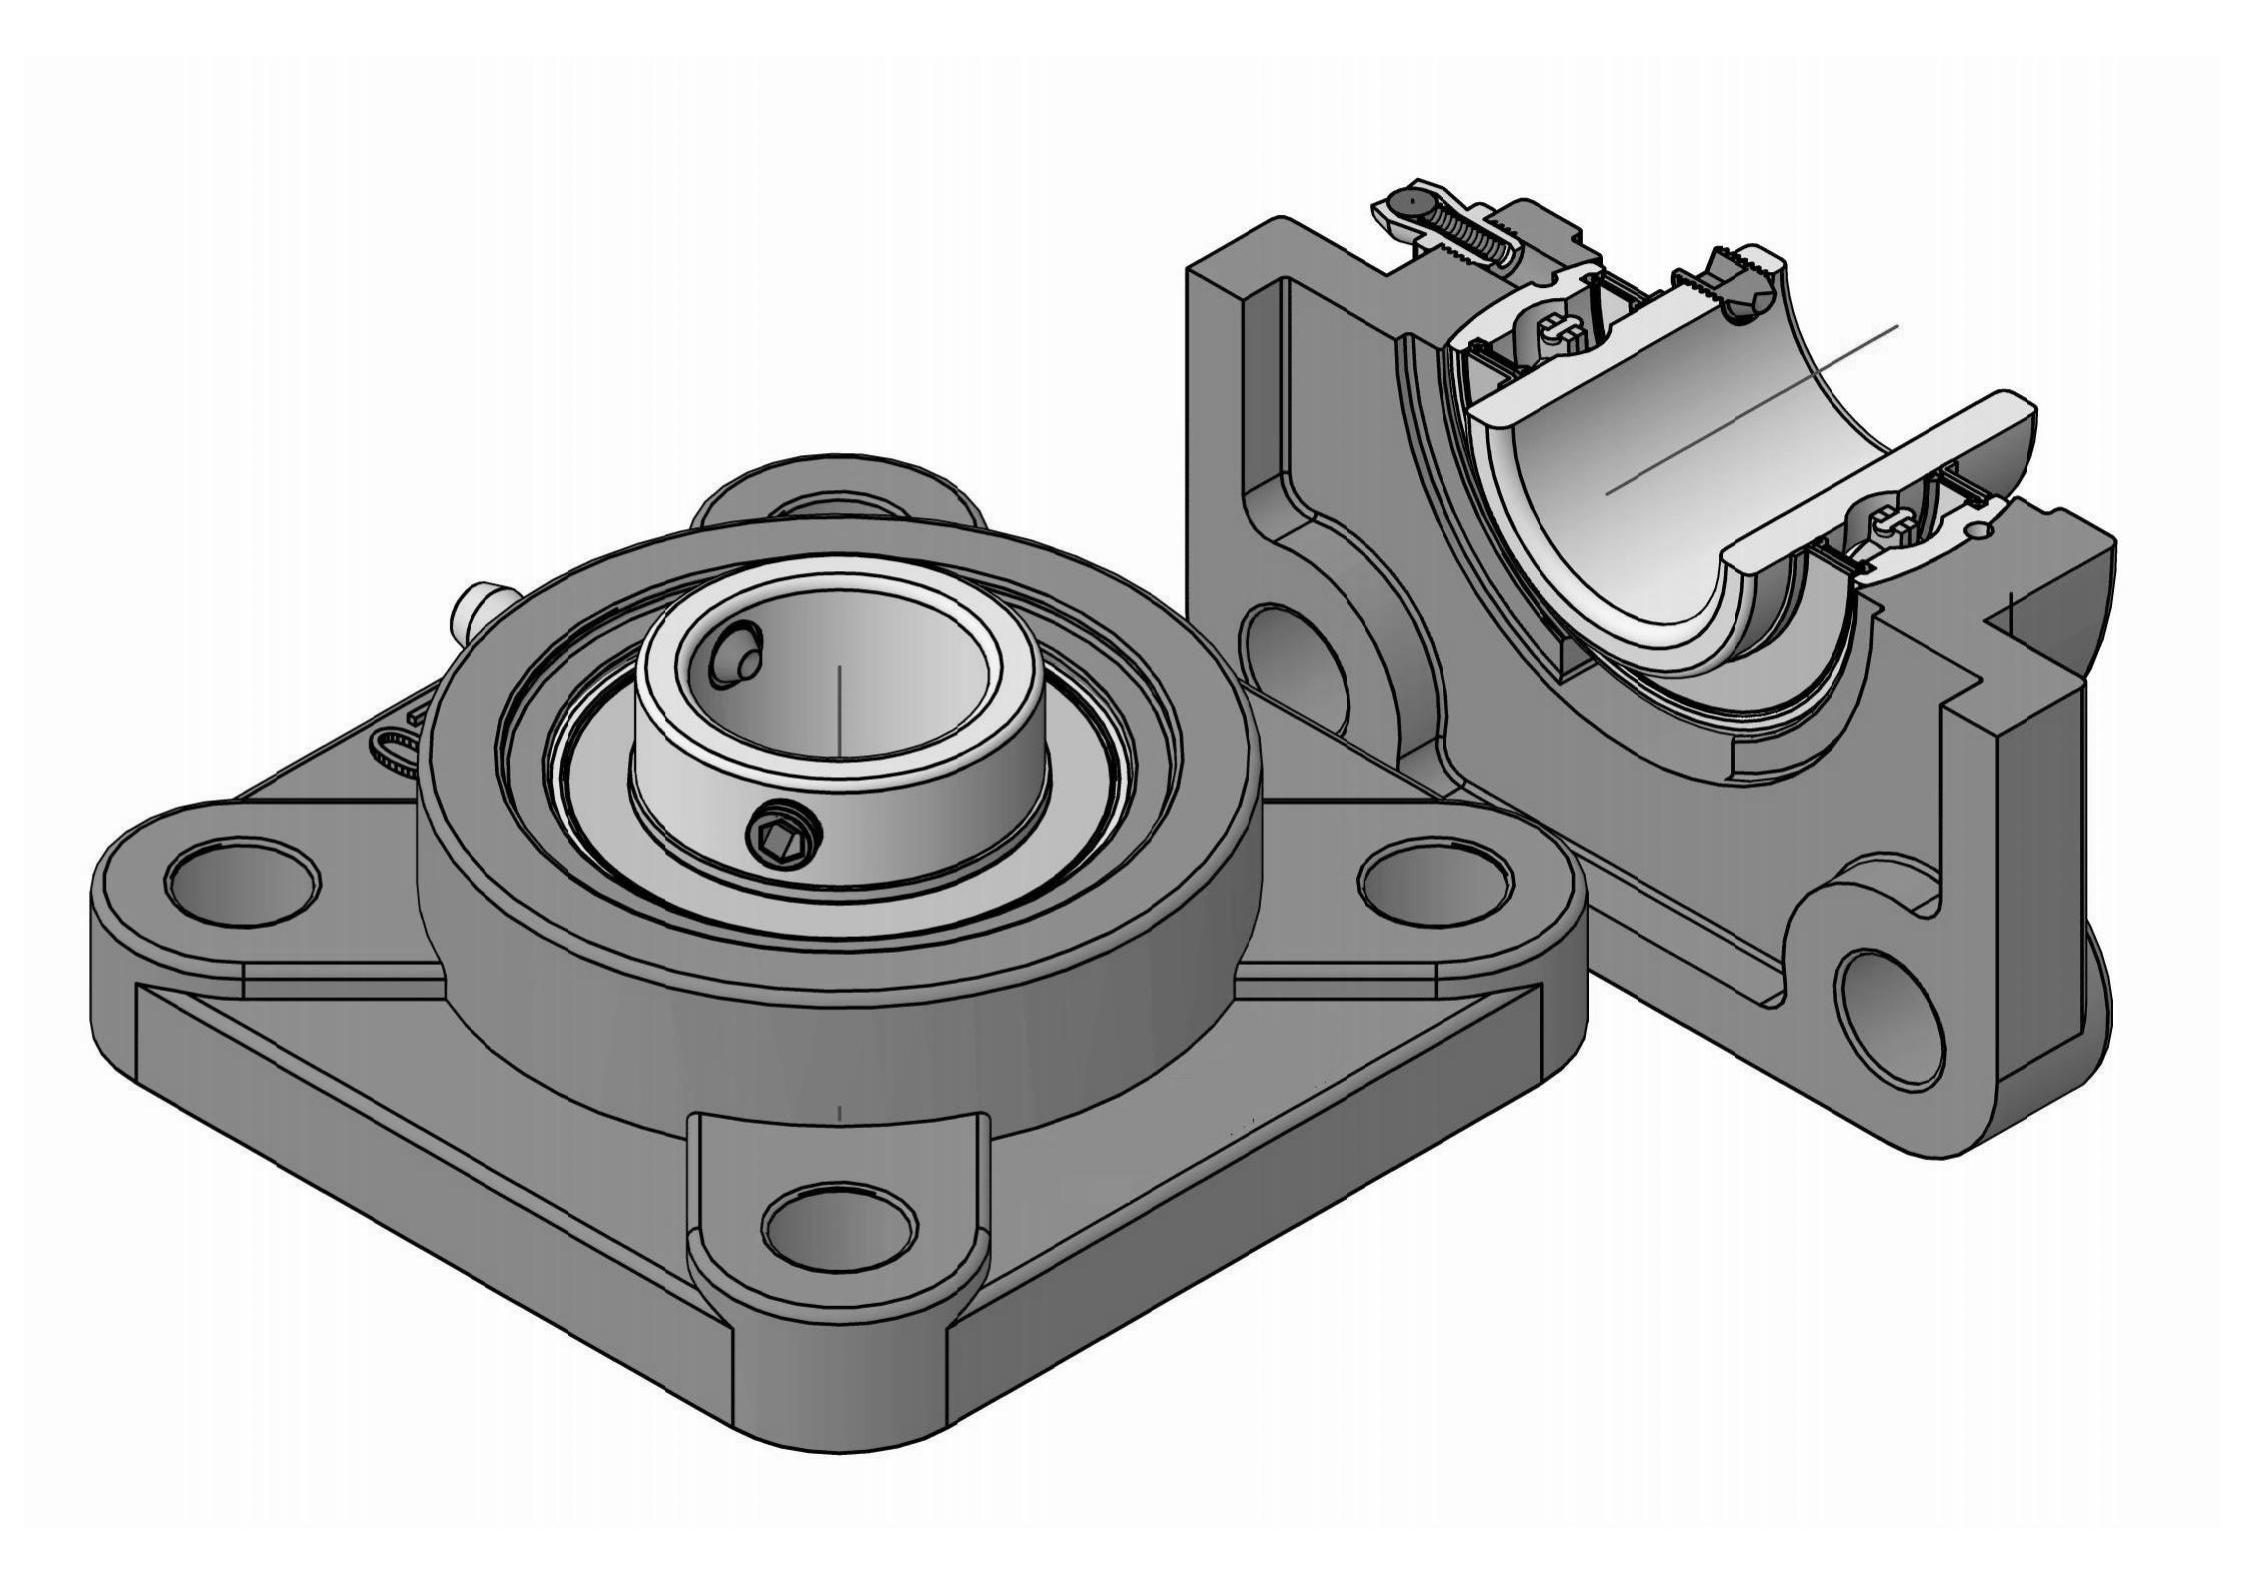 UCFX20-63 upat ka Bolt Square flange bearing units nga adunay 3-15/16 inch bore